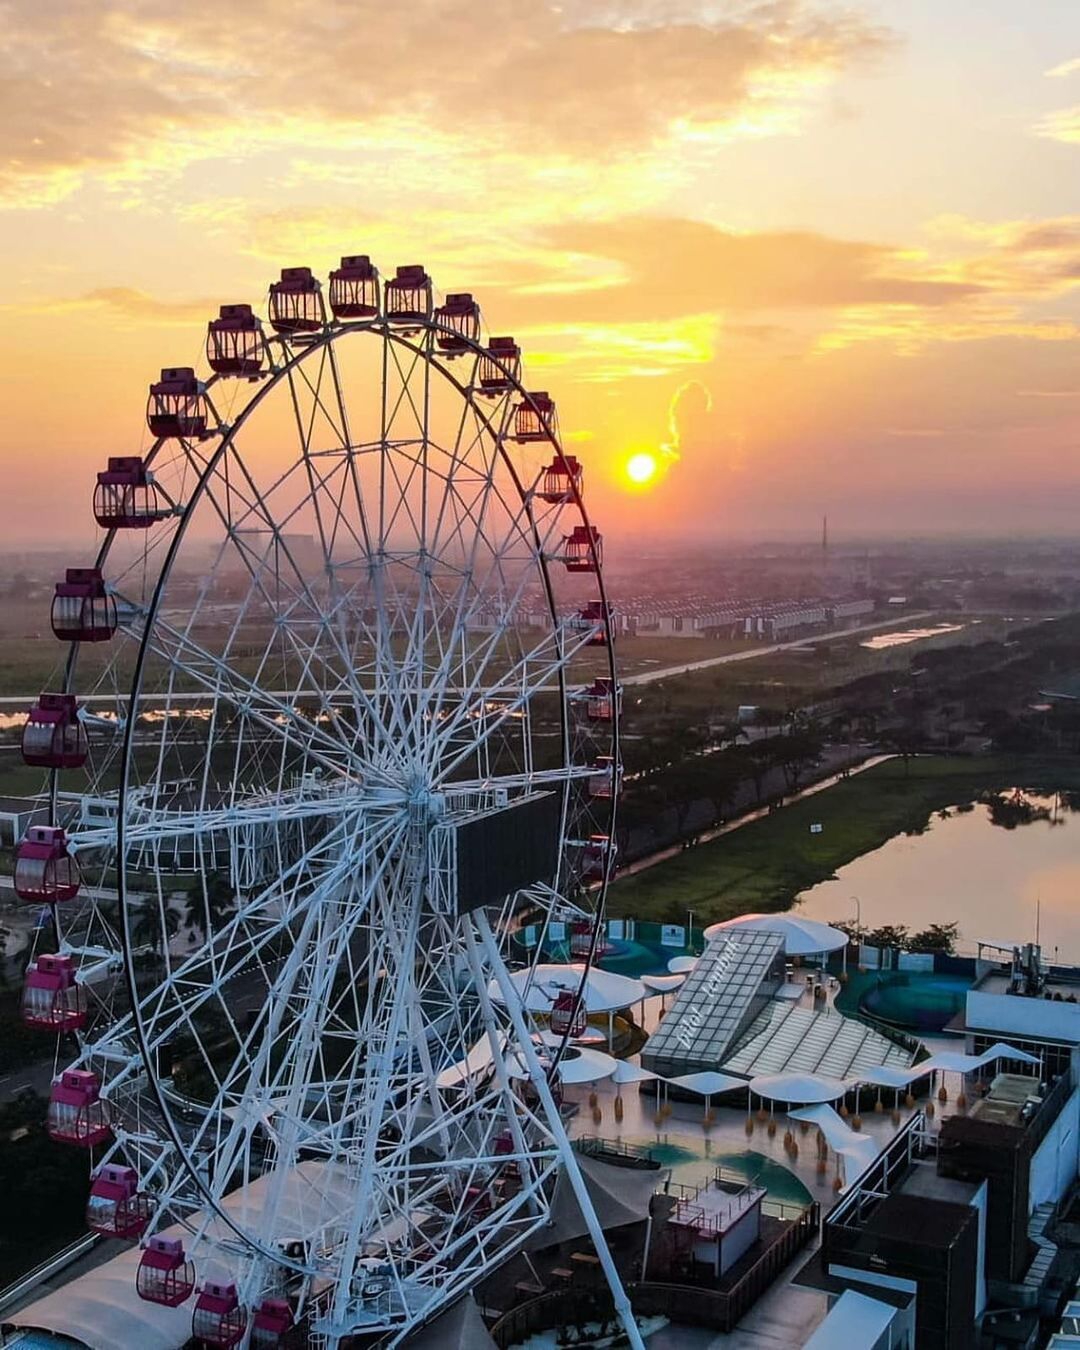 Courtesy of J-SKY Ferris Wheel